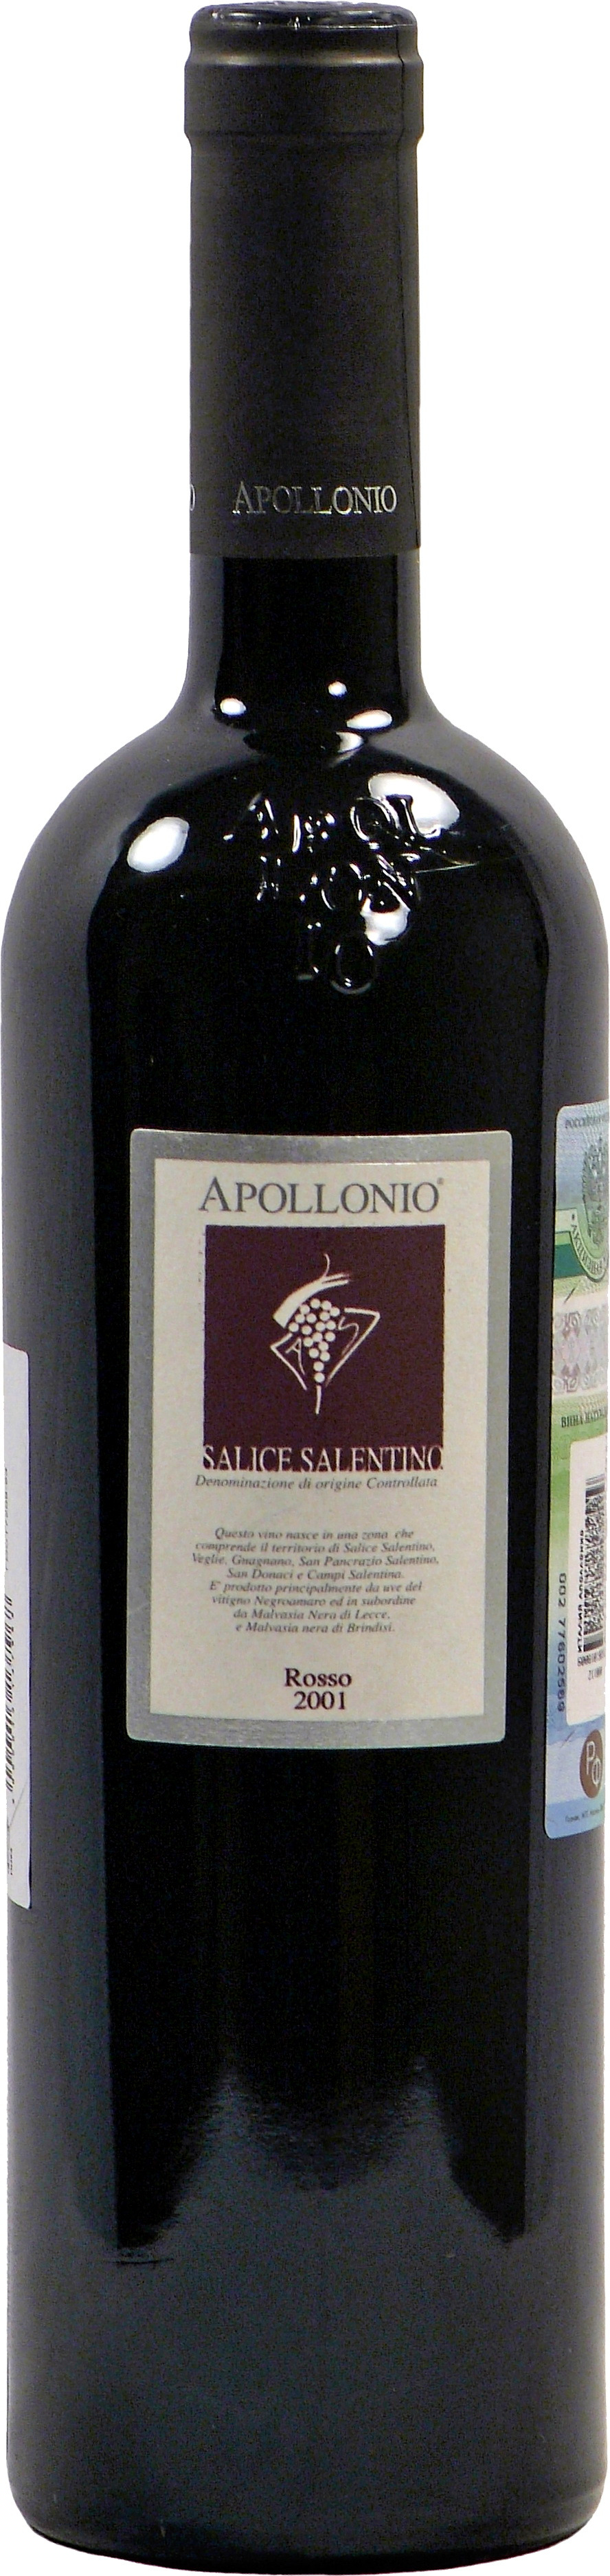 Аполлонио Саличе Салентино 2008 DOC